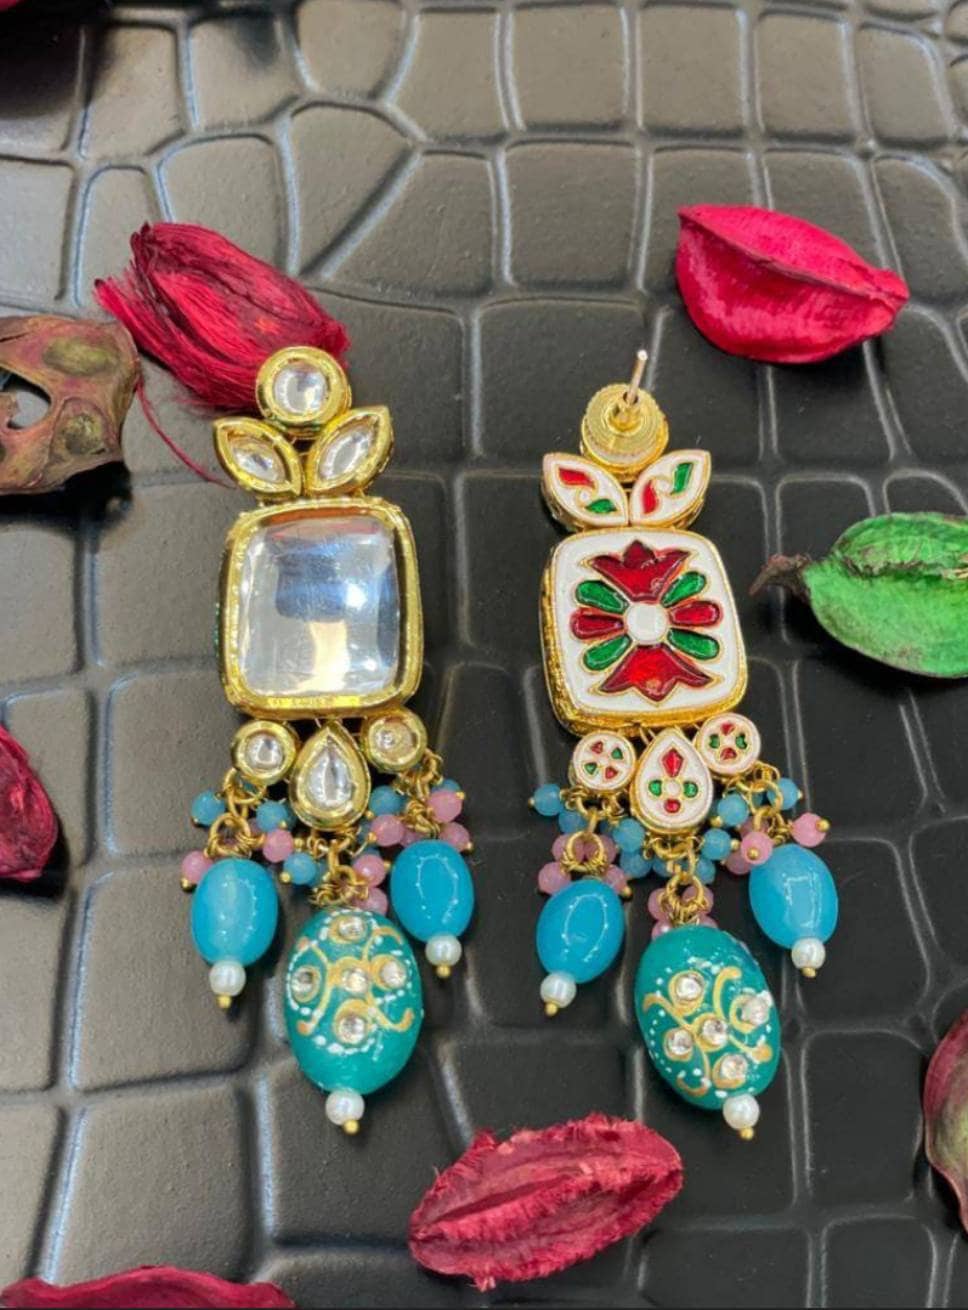 Indian Kundan Choker, Indian Jewelry, Bollywood Jewelry, Pakistani Jewelry, Indian Wedding Necklace, Bridal Choker, Kundan Necklace, Choker | Save 33% - Rajasthan Living 17